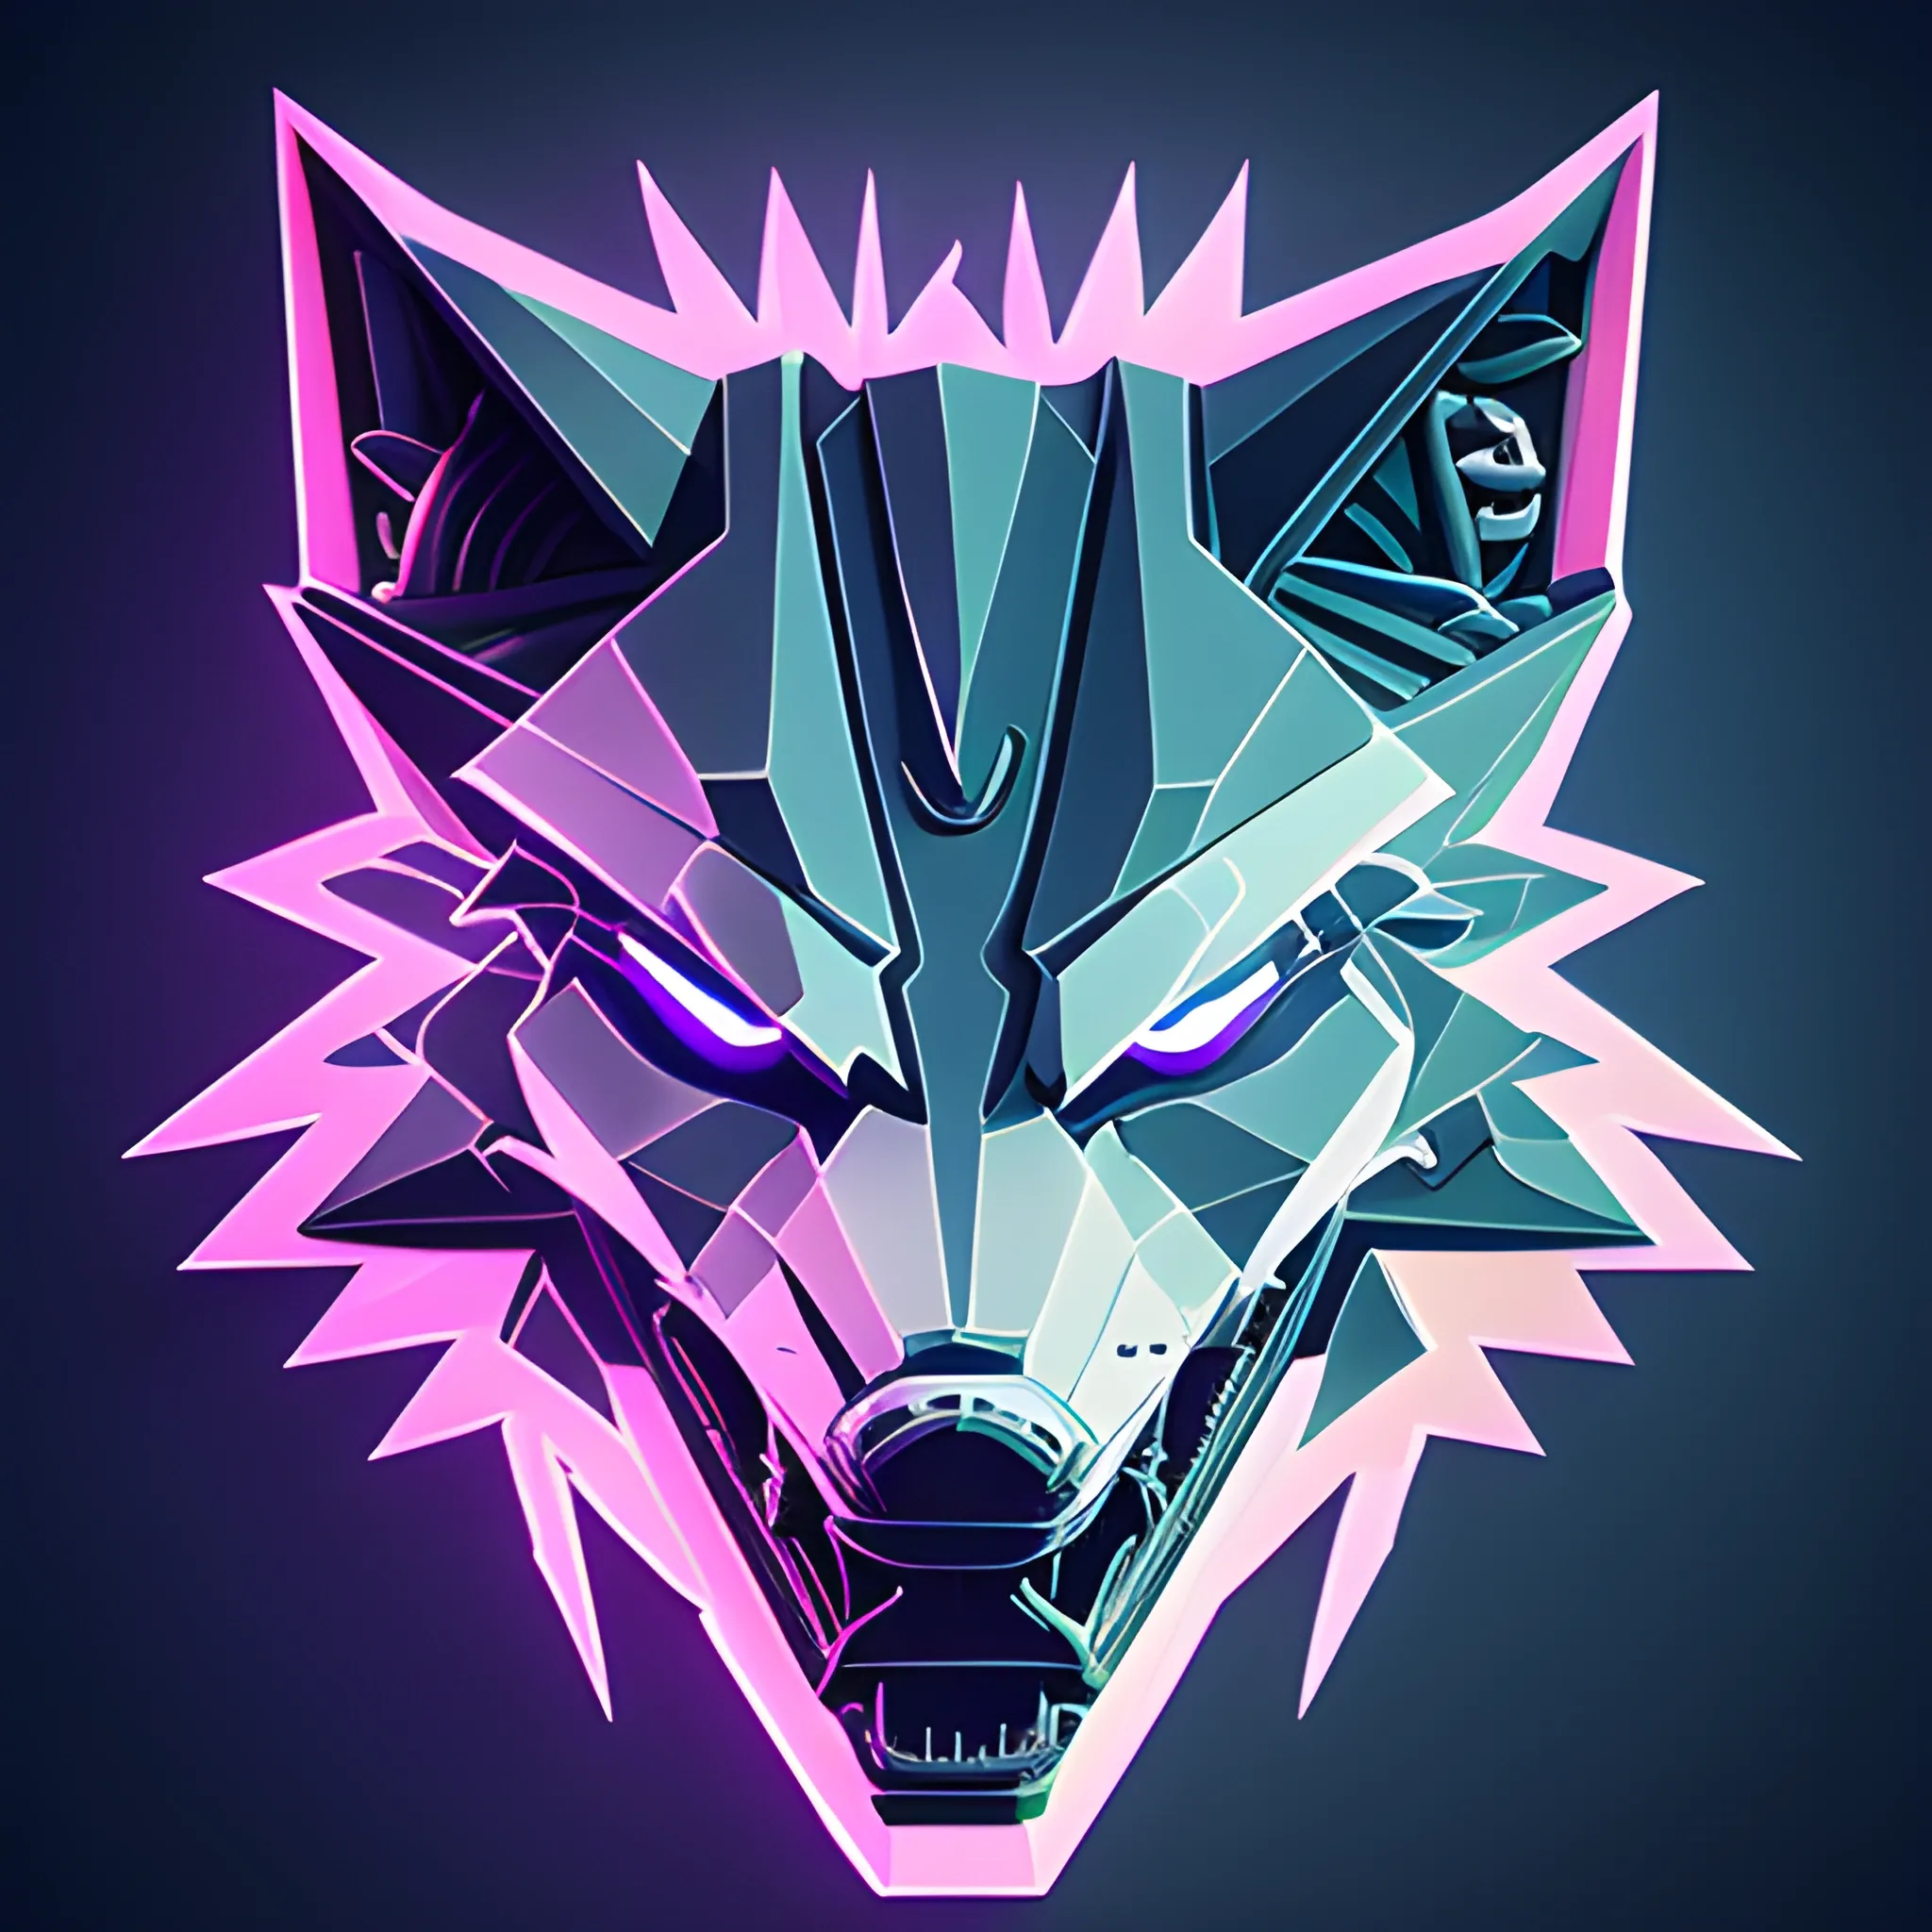 Cyberpunk lone angry wolf  logo png
, 3D, Cartoon, Trippy 